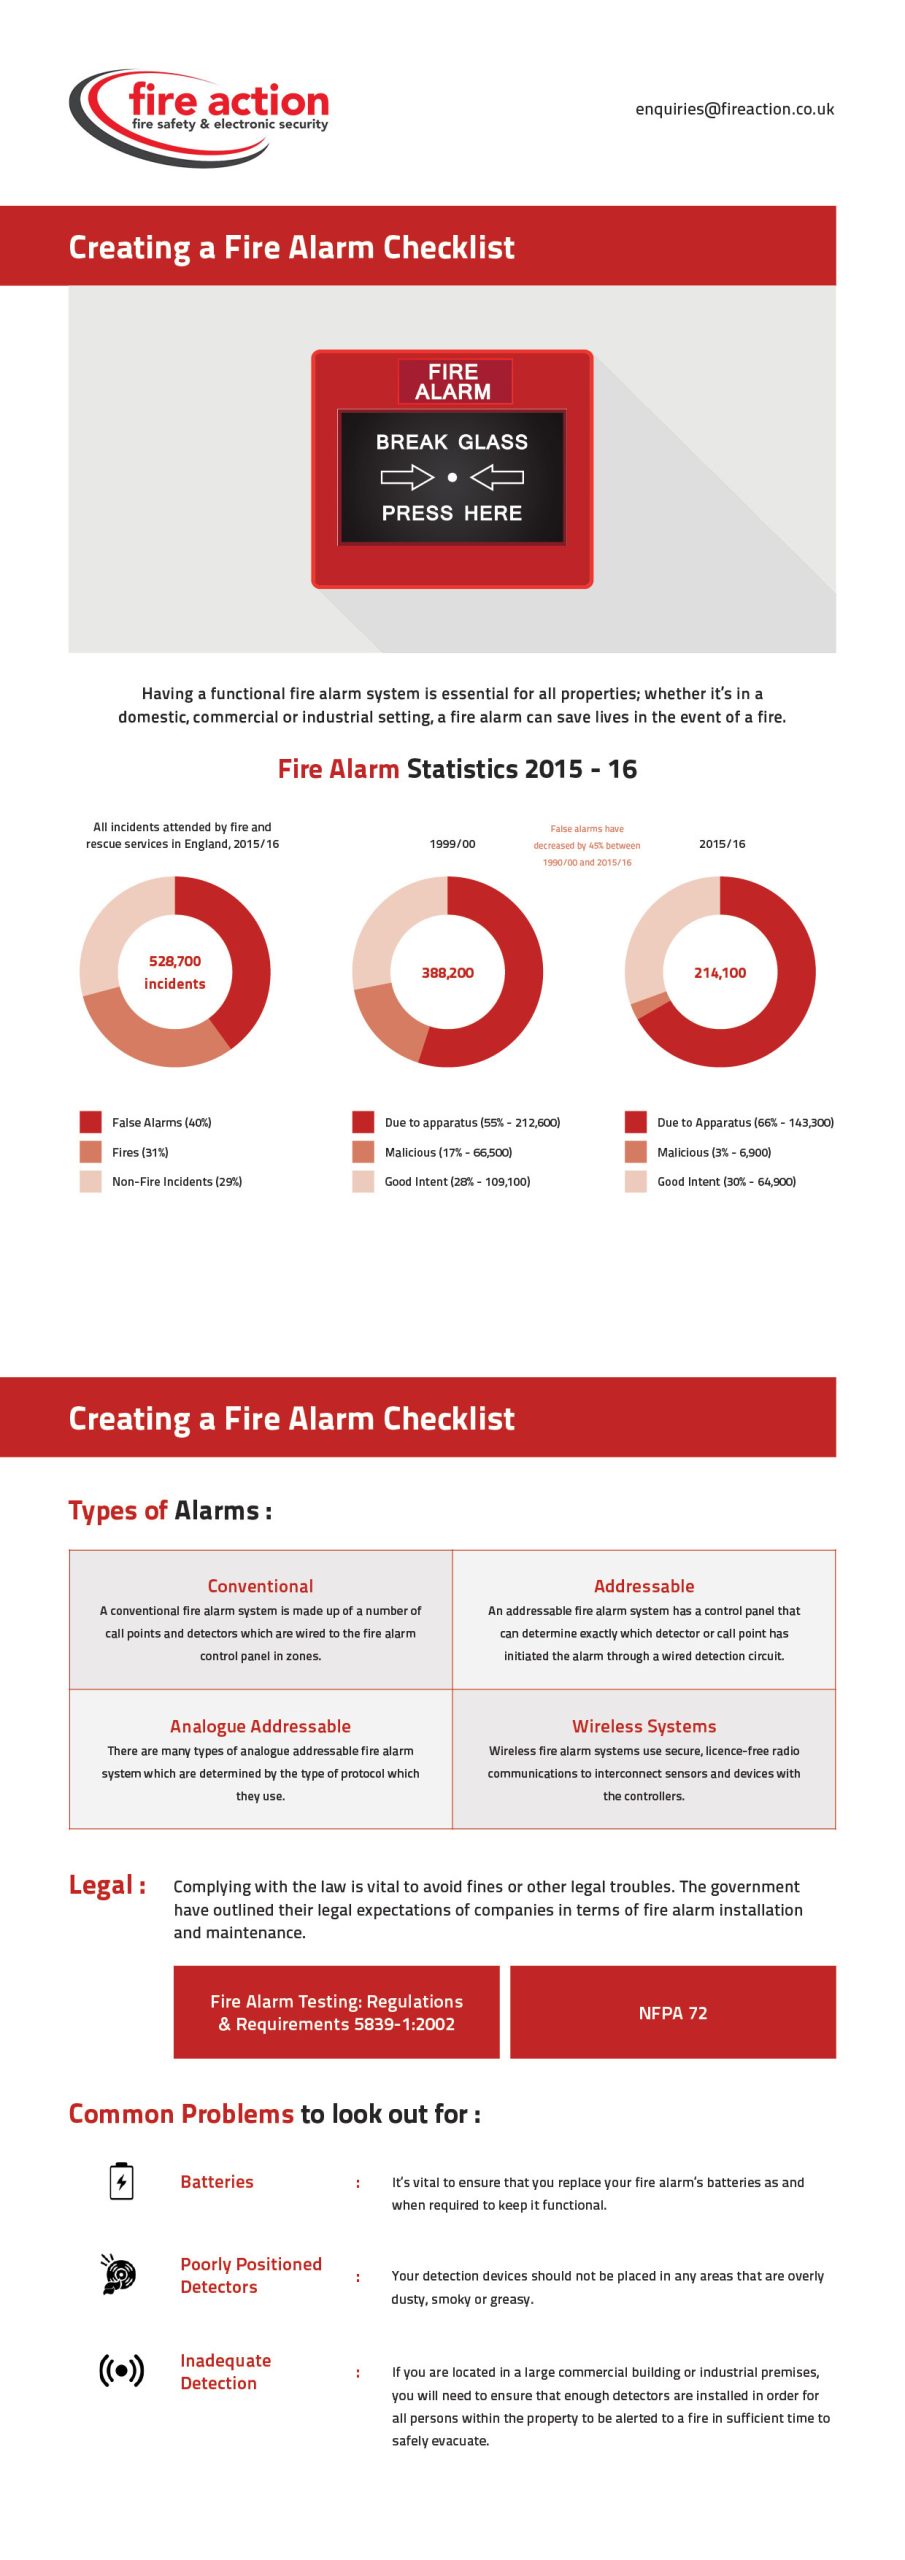 Fire Action Fire Alarm Checklist